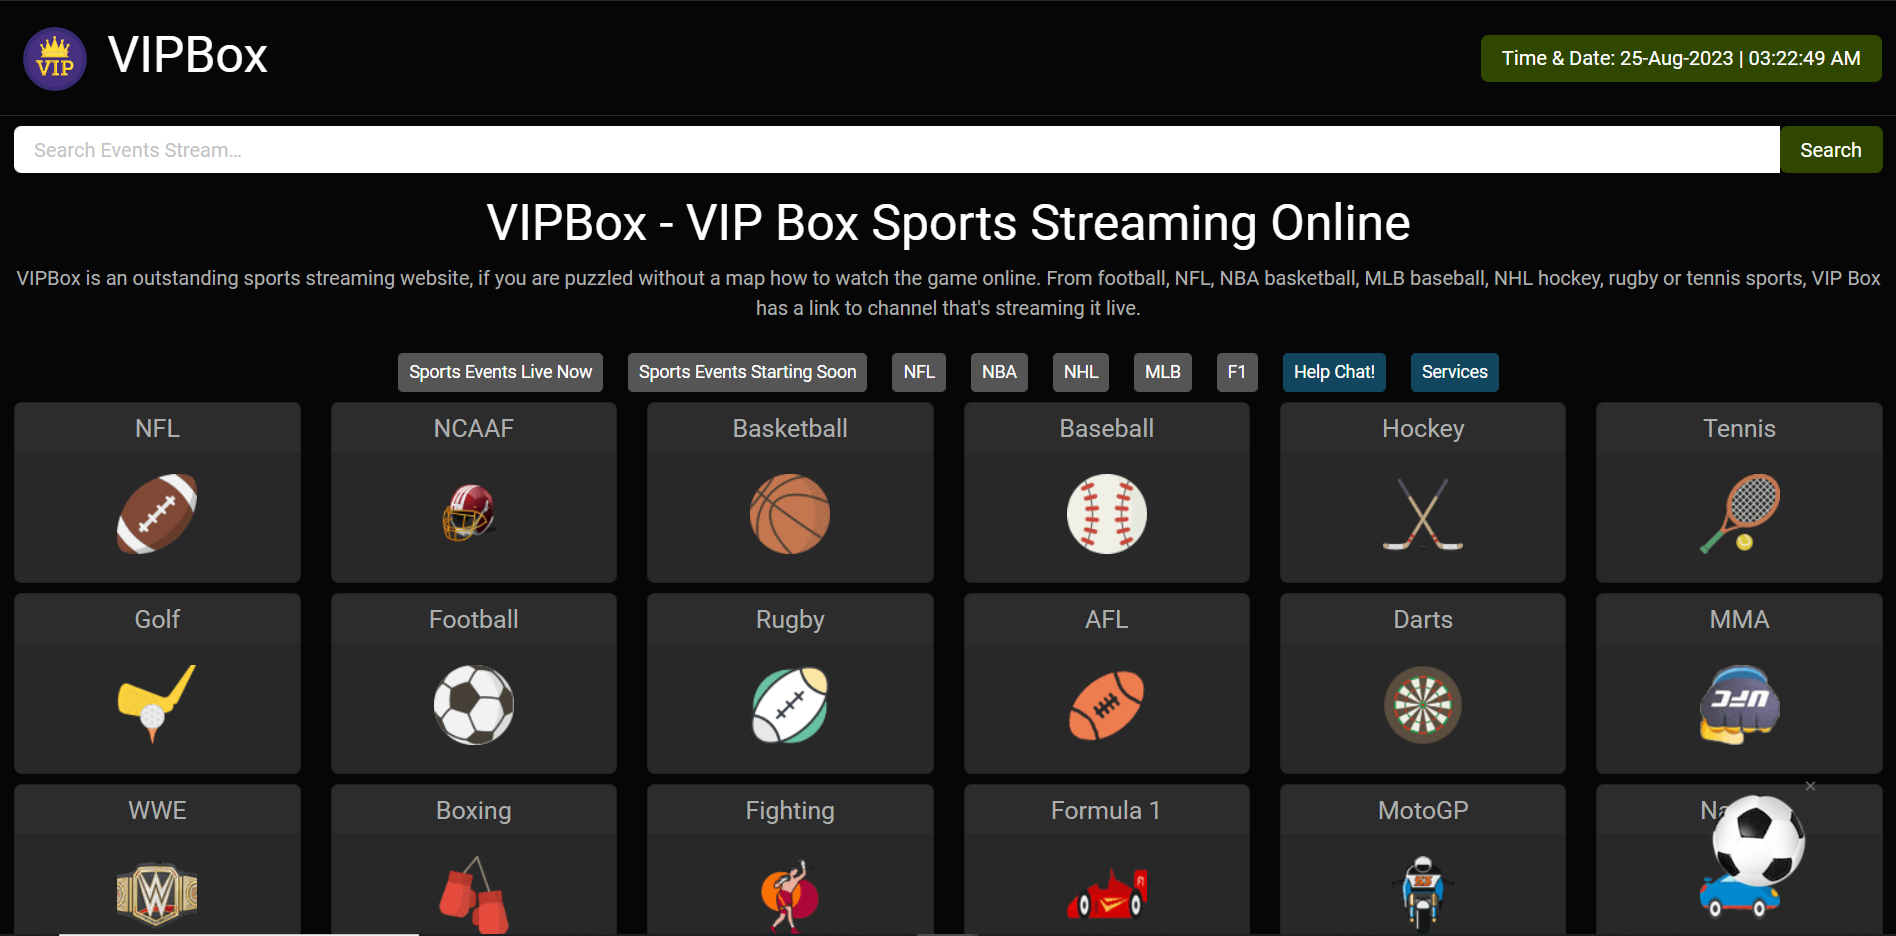 NFL Live Streams on VIPBox